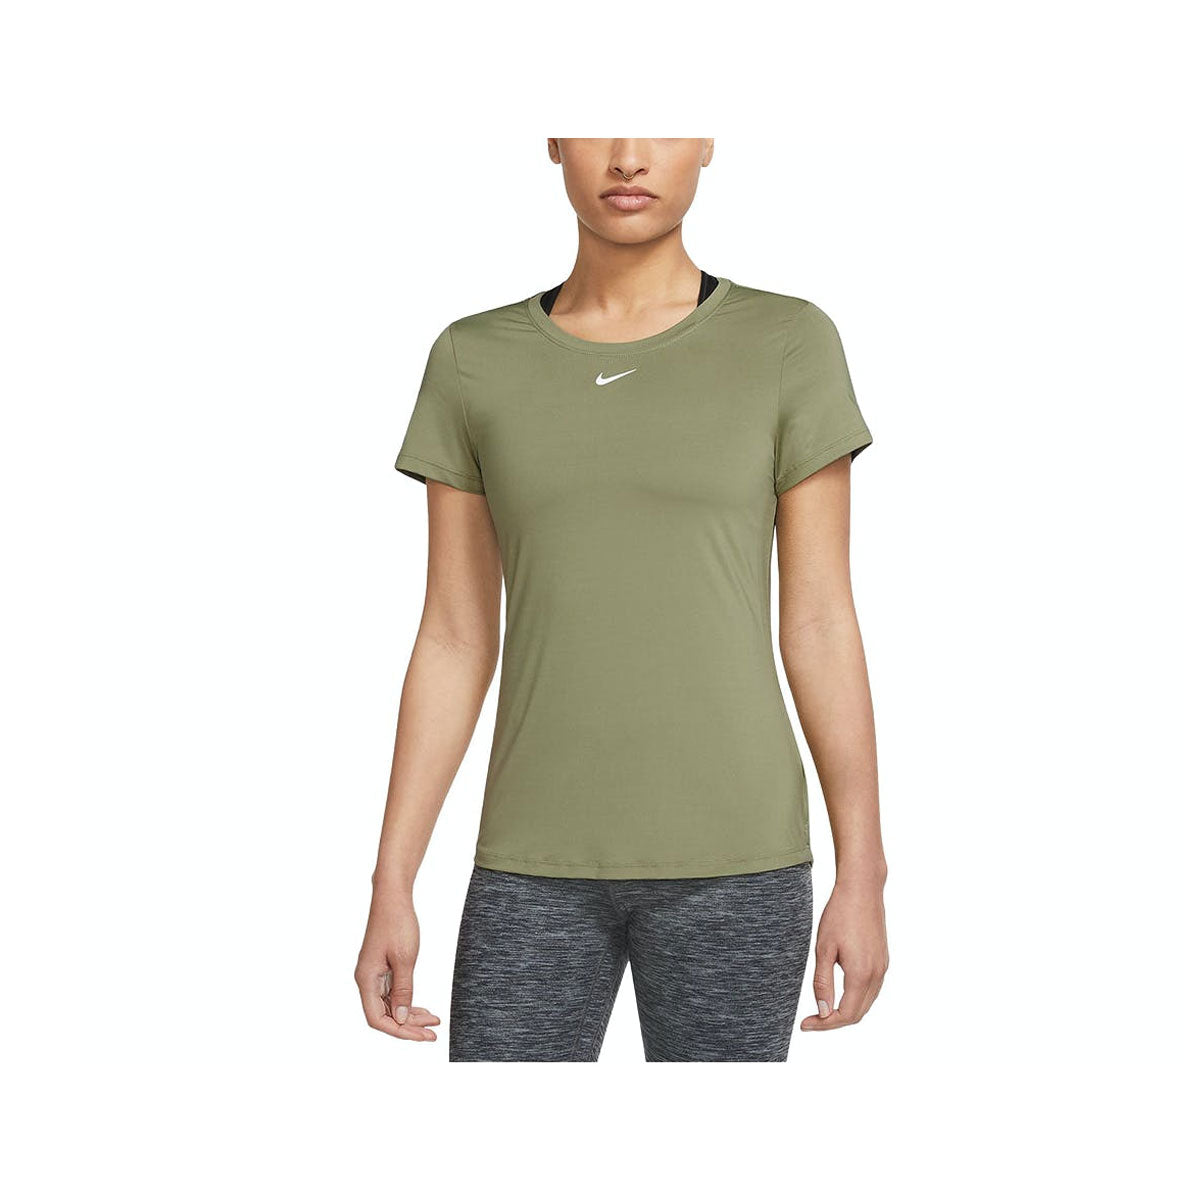 Nike Women's Dri-FIT One Slim Fit Short-Sleeve Top